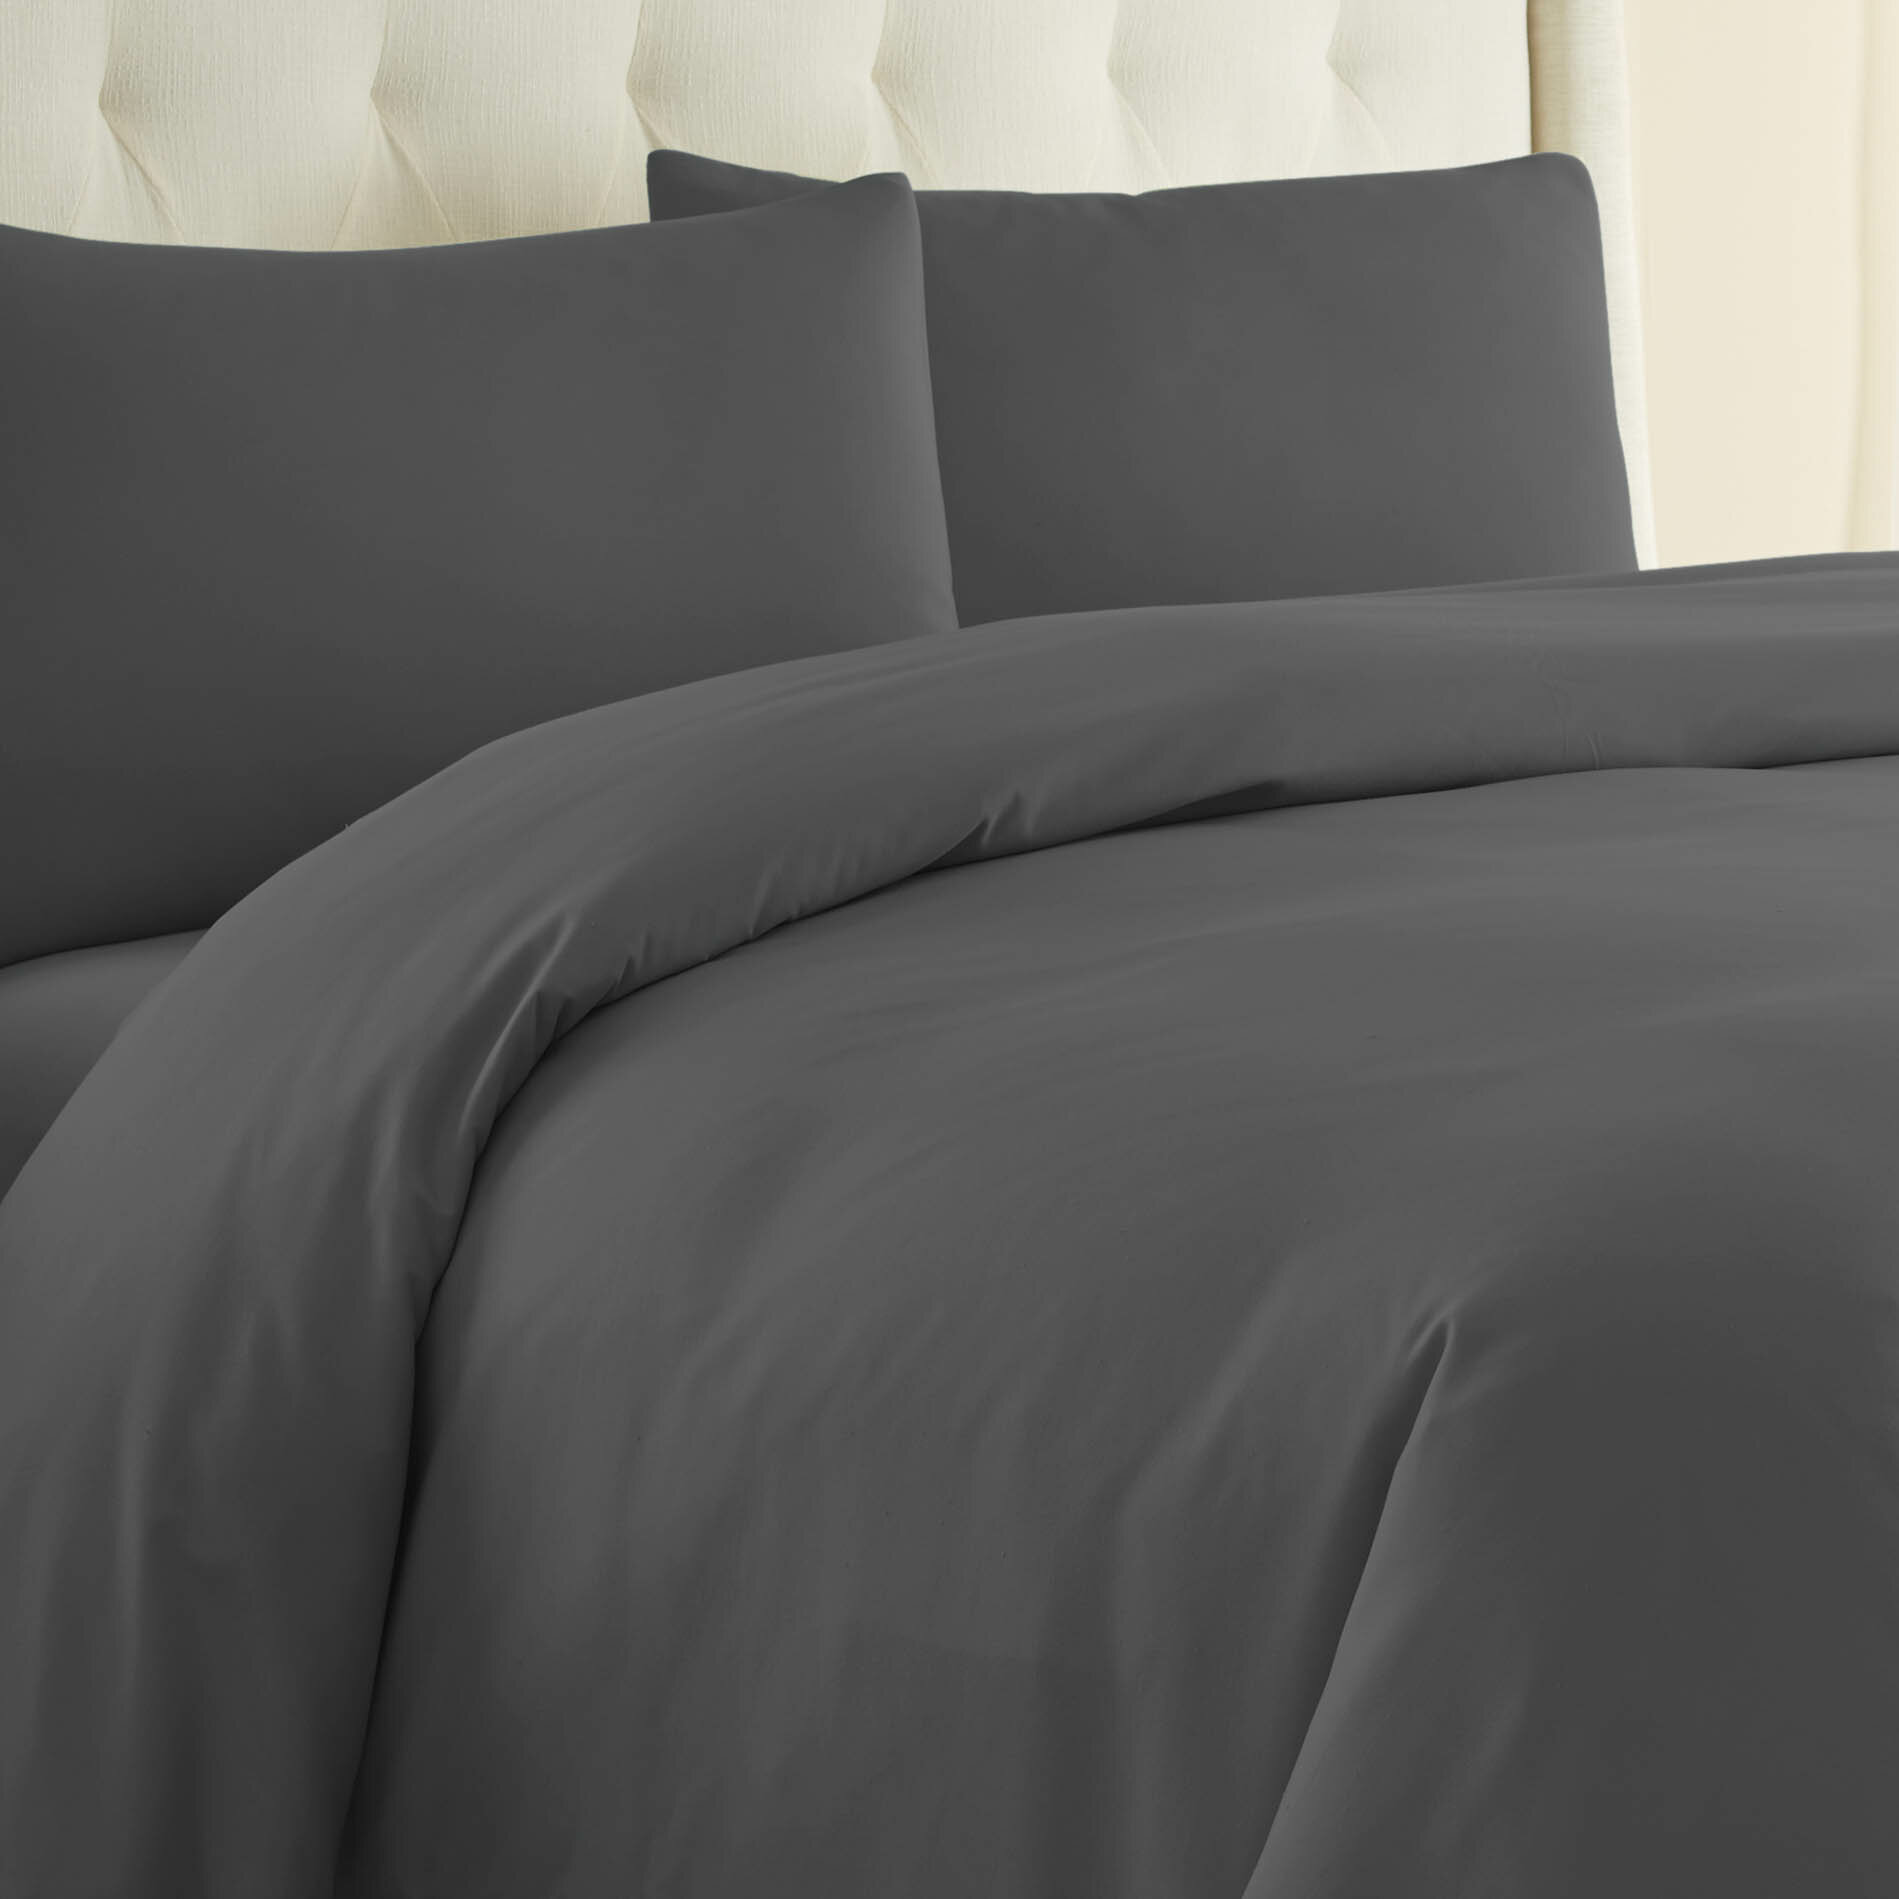 3D Premium Modern Duvet Set Quilt Cover Bedding Set with Pillow Cases All sizes 